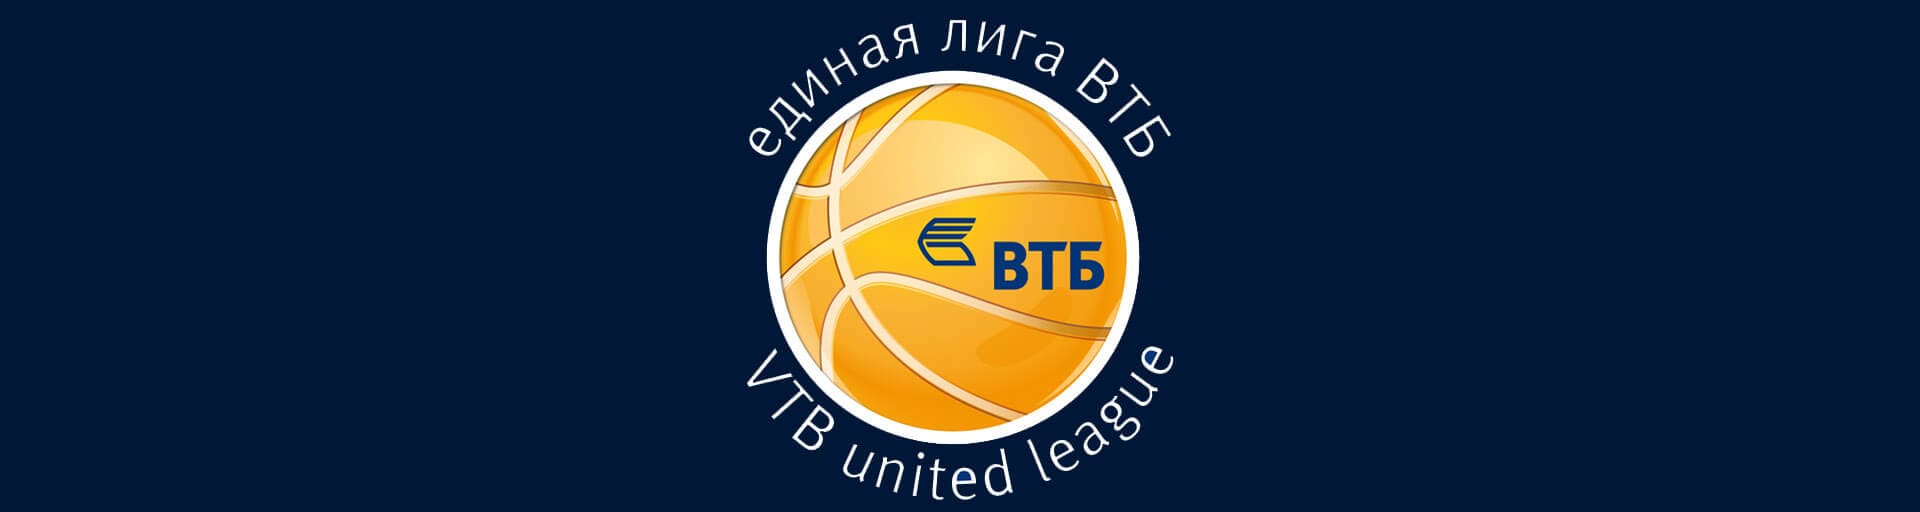 Единая лига ВТБ 2020-2021, баскетбол: матчи, календарь, таблица